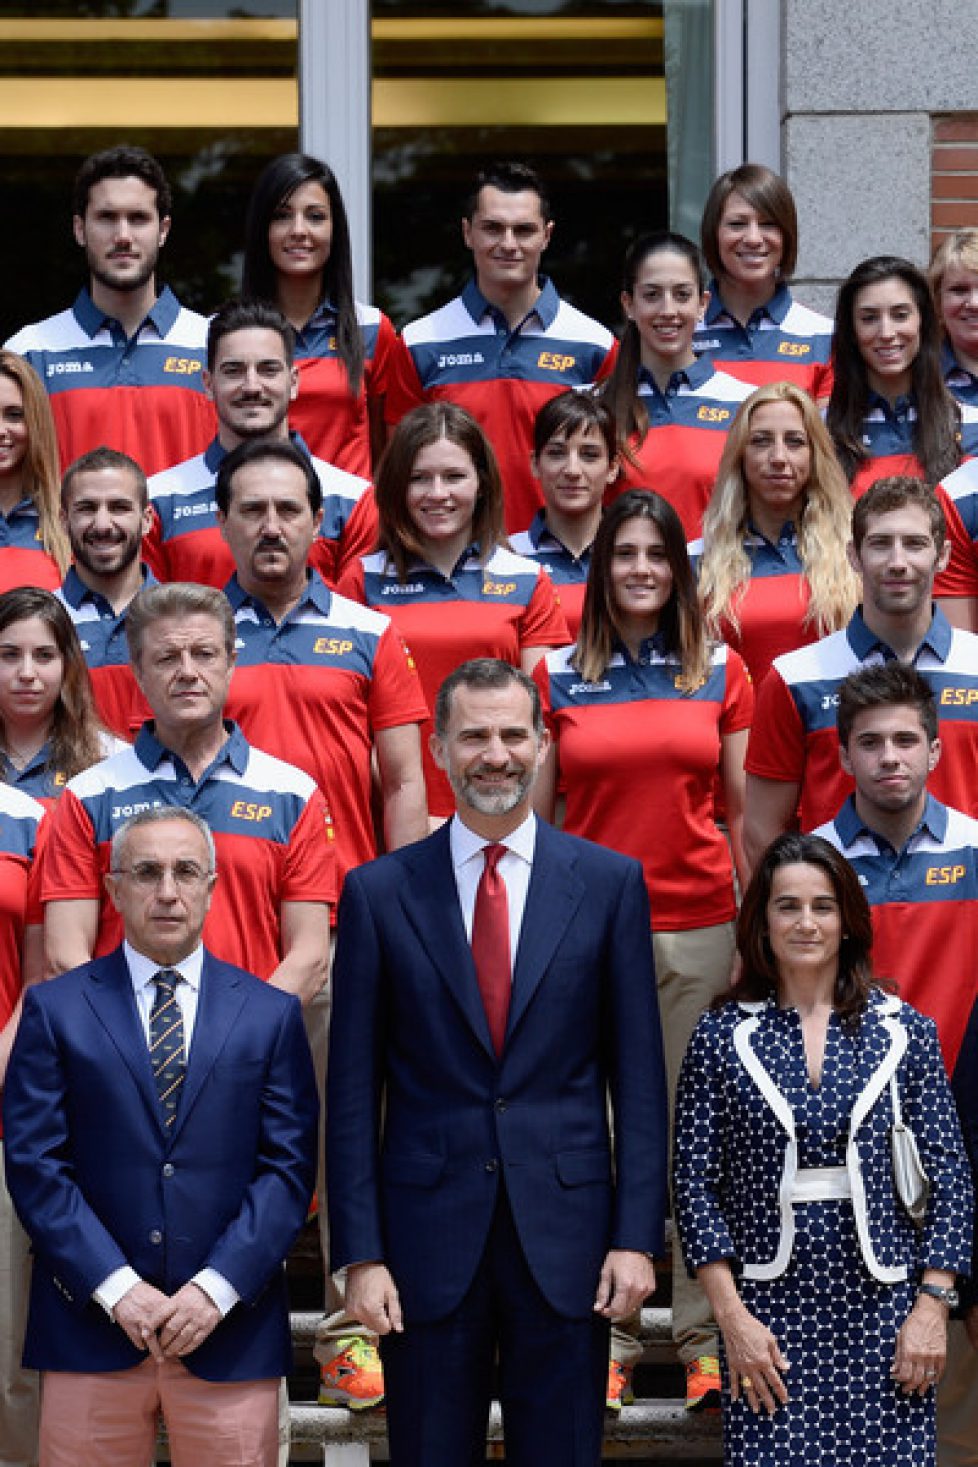 King+Felipe+VI+Spain+Attends+Meeting+Atlethes+Ay-G6MRiIUQl